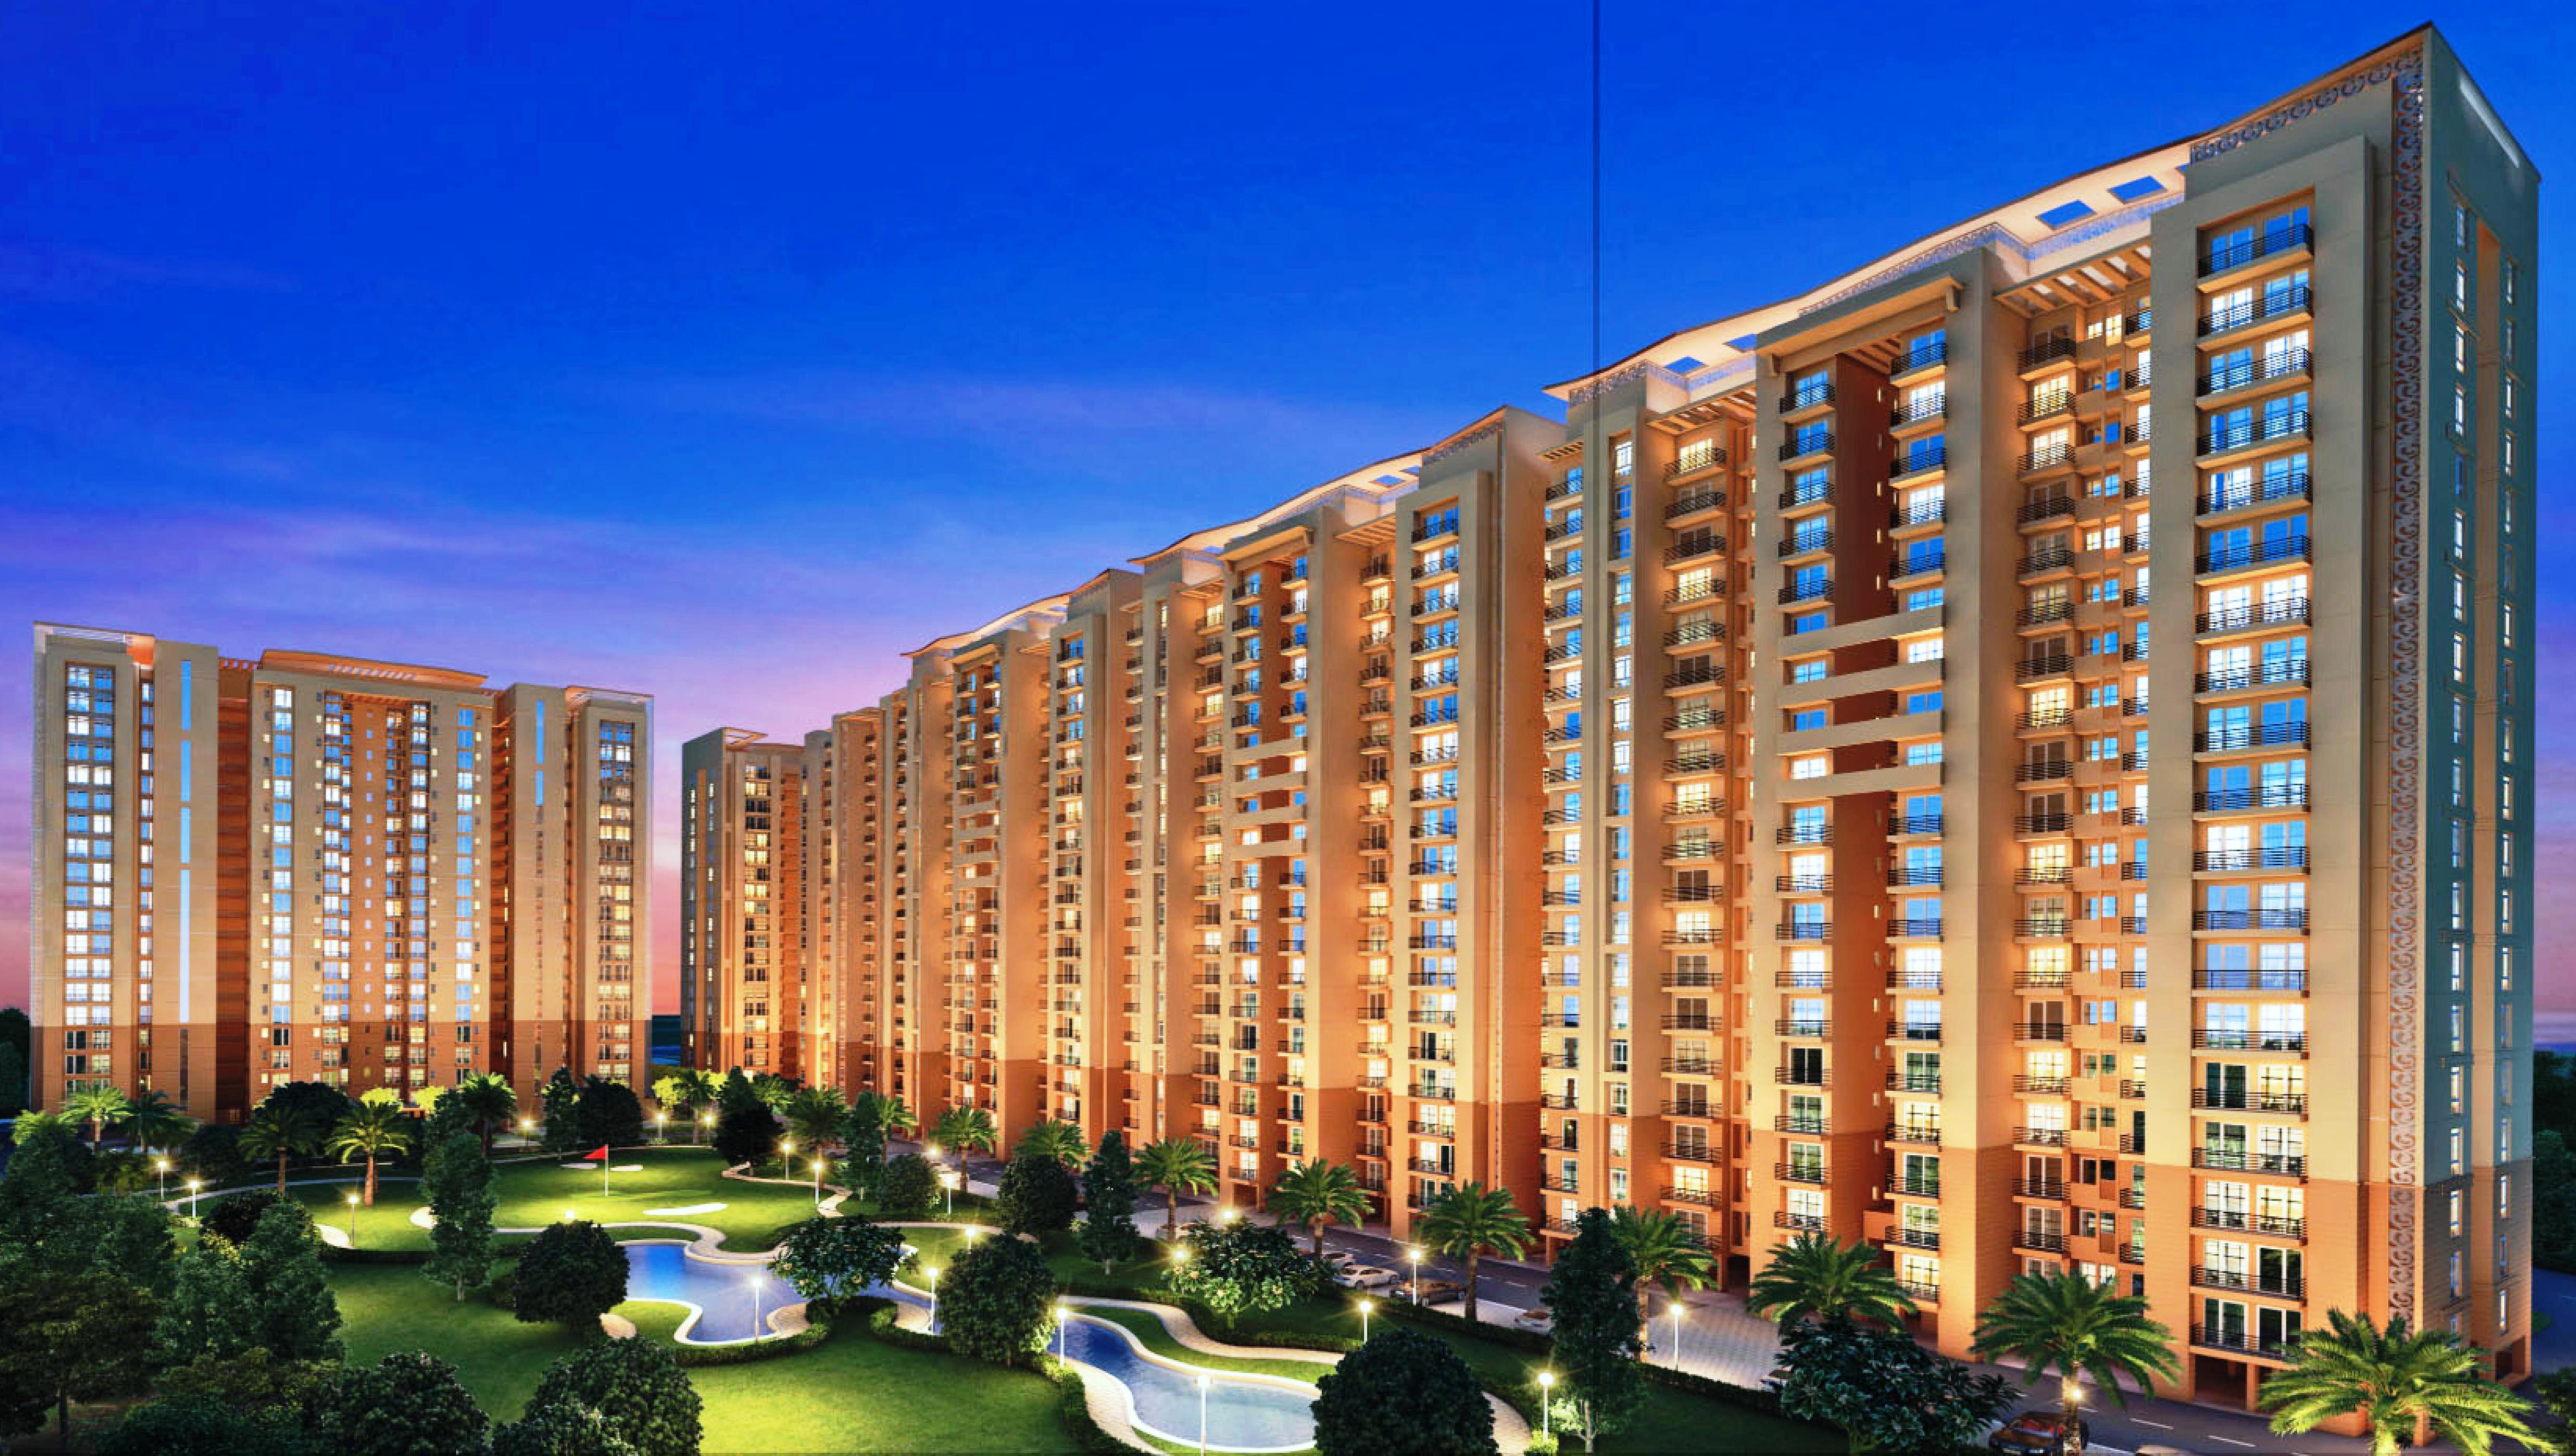 Aditya City Apartments Brochure Pdf Image